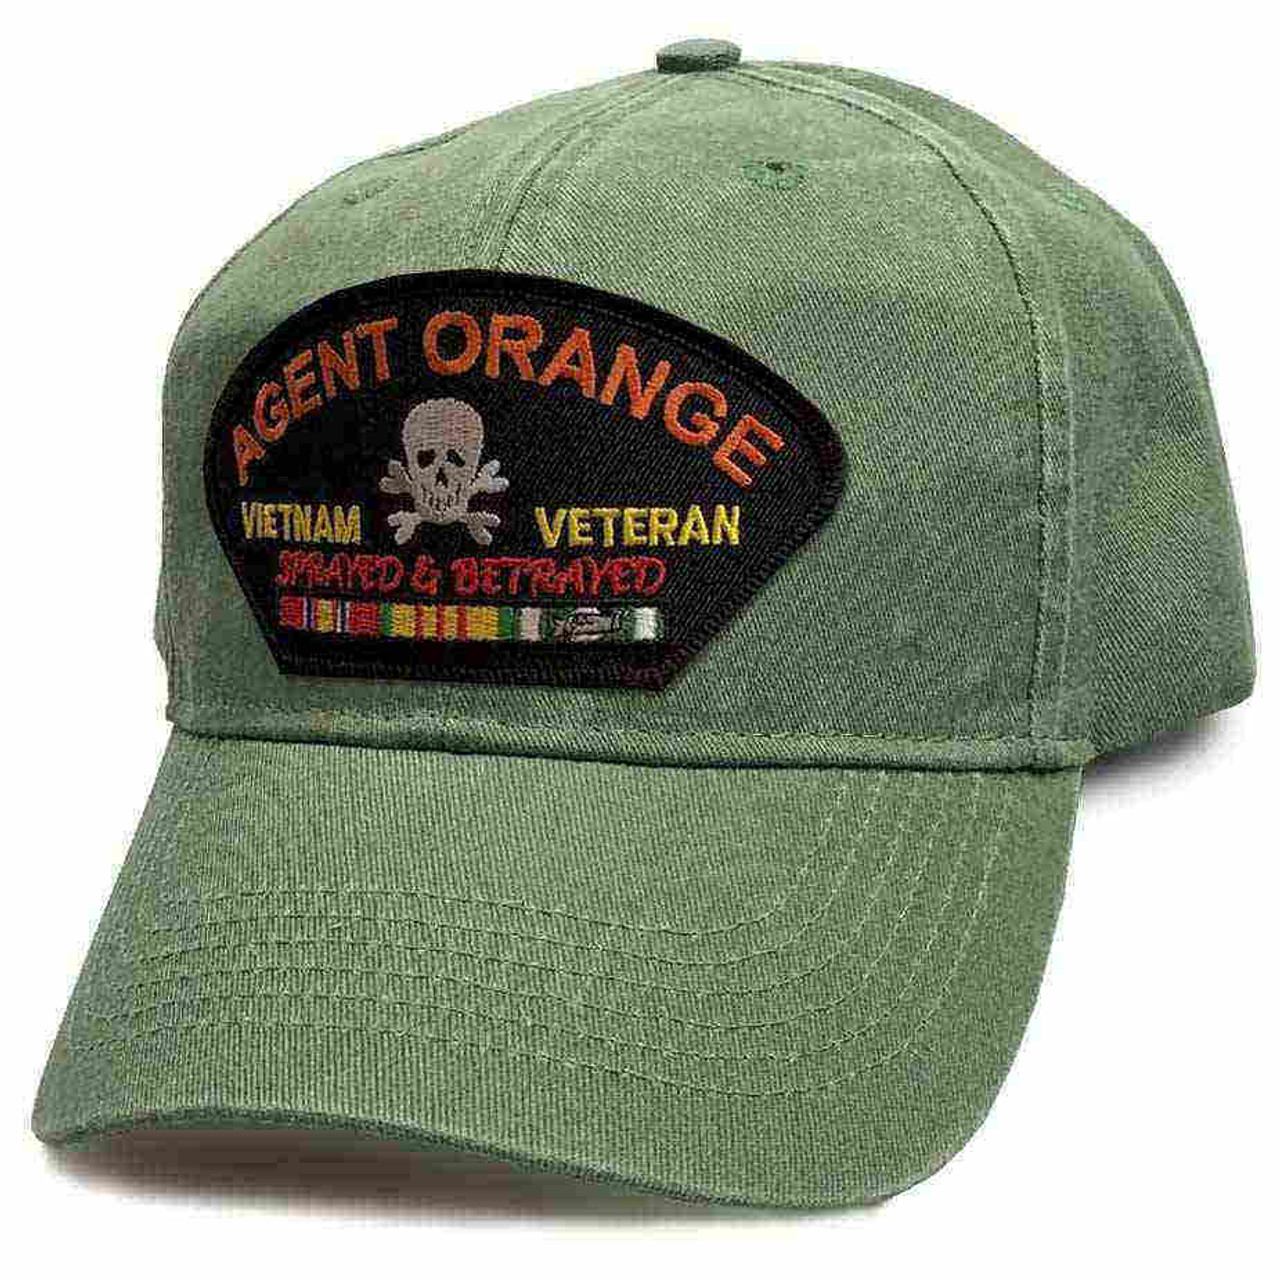 vietnam veteran hat agent orange classic edition vintage o d